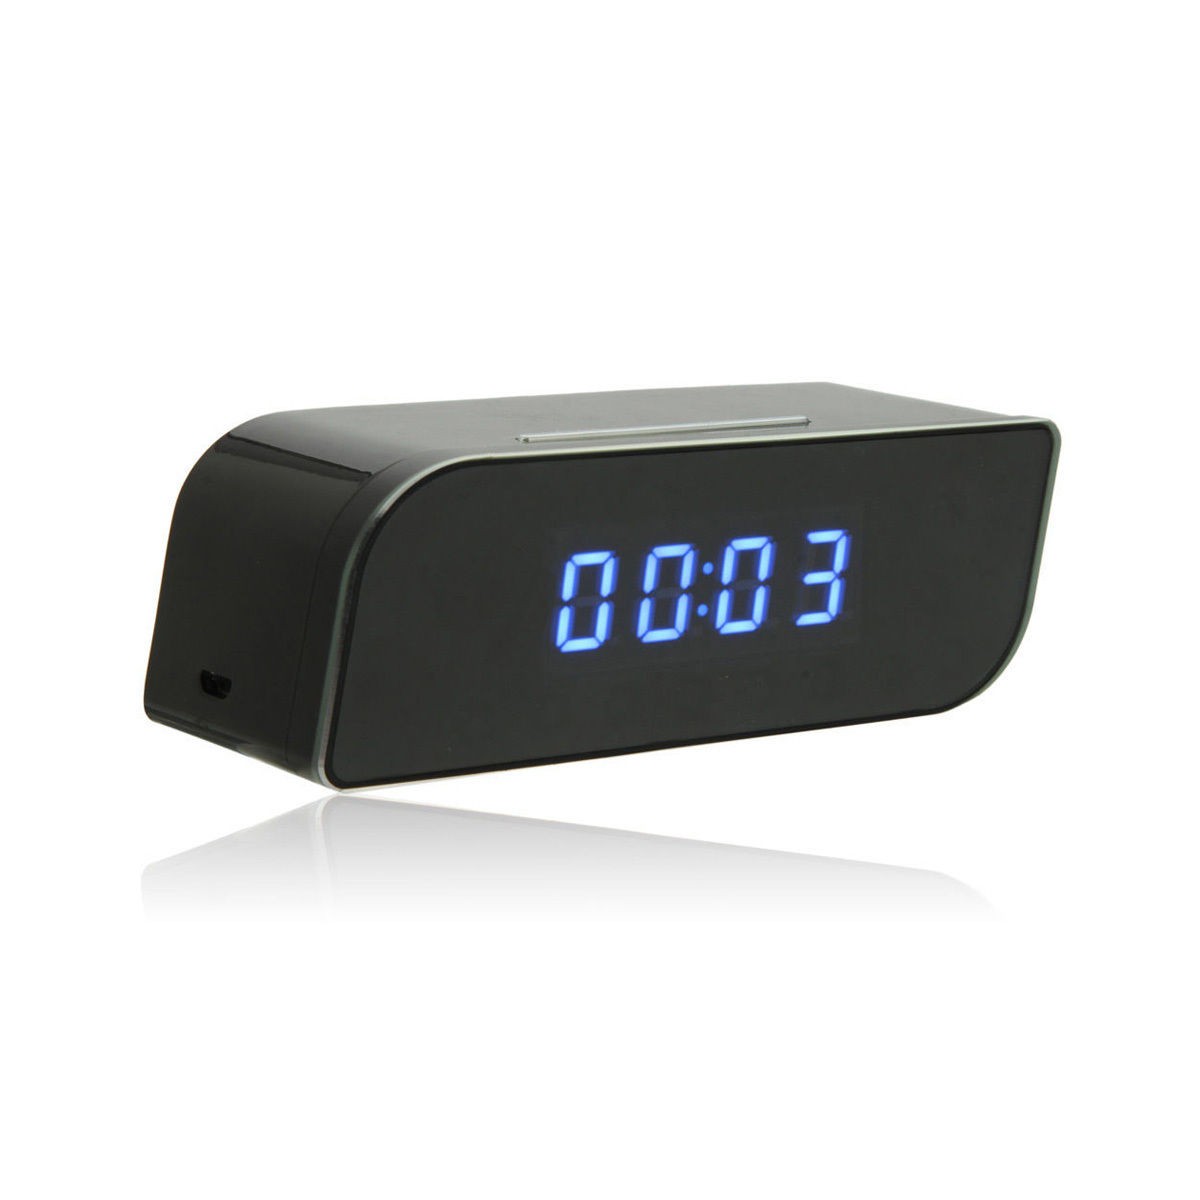 Мини камера часы. Часы камера будильник sd880. Z10 беспроводная WIFI камера часы 1080p Wi-Fi мини камер.